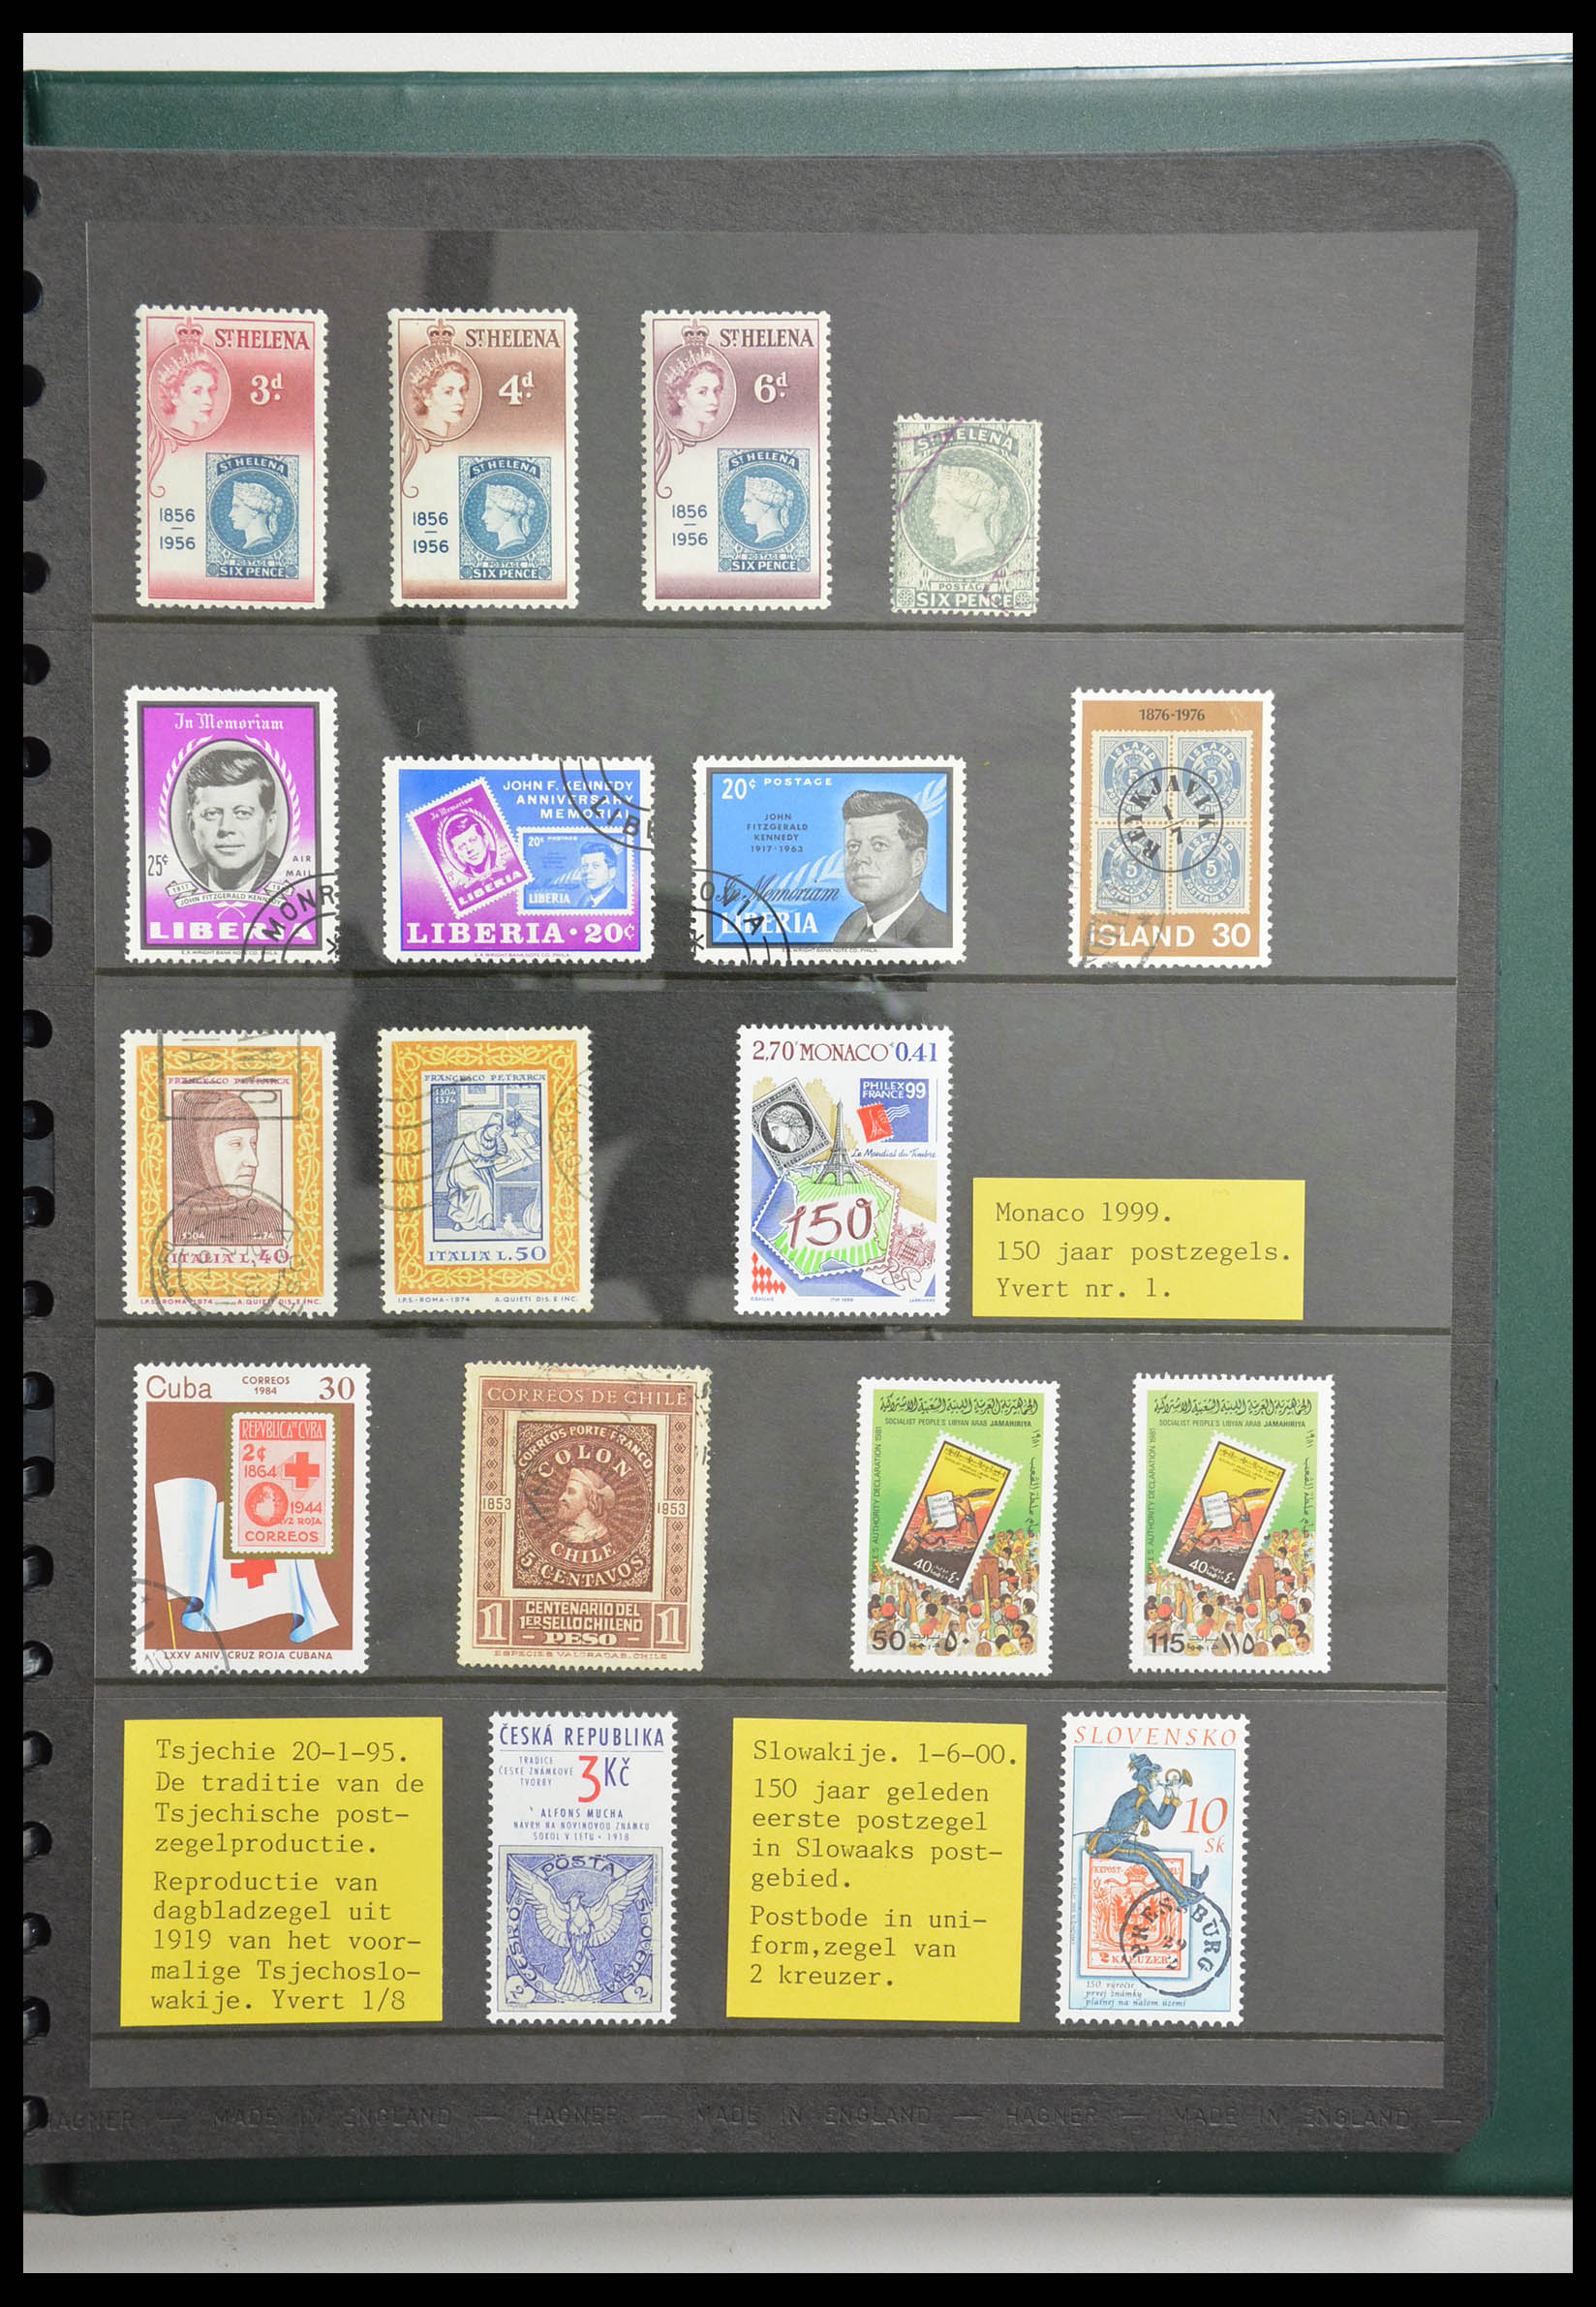 28337 069 - 28337 Postzegel op postzegel 1840-2001.